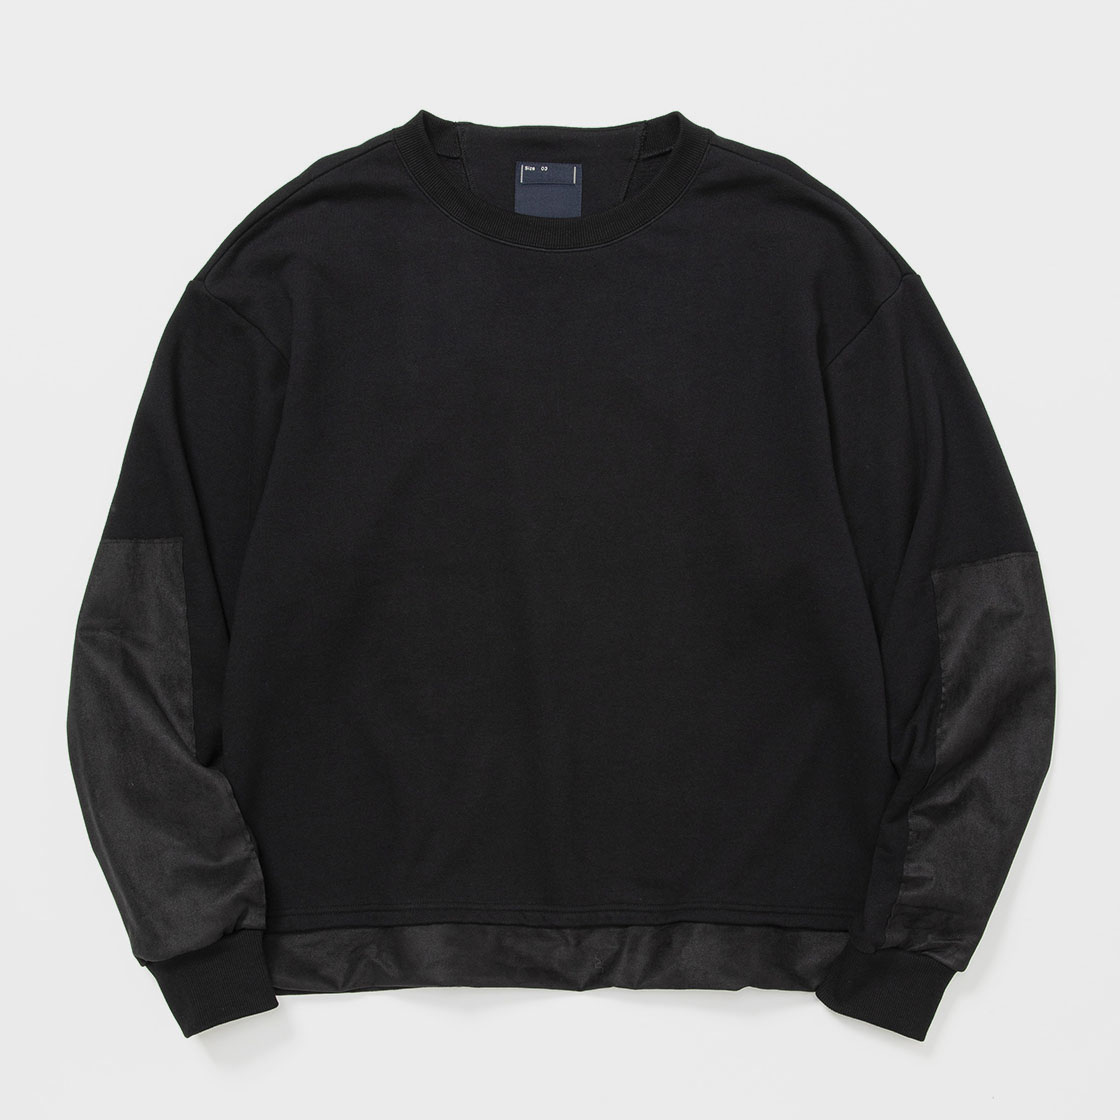 Imitation Suede Sweatshirt / Black